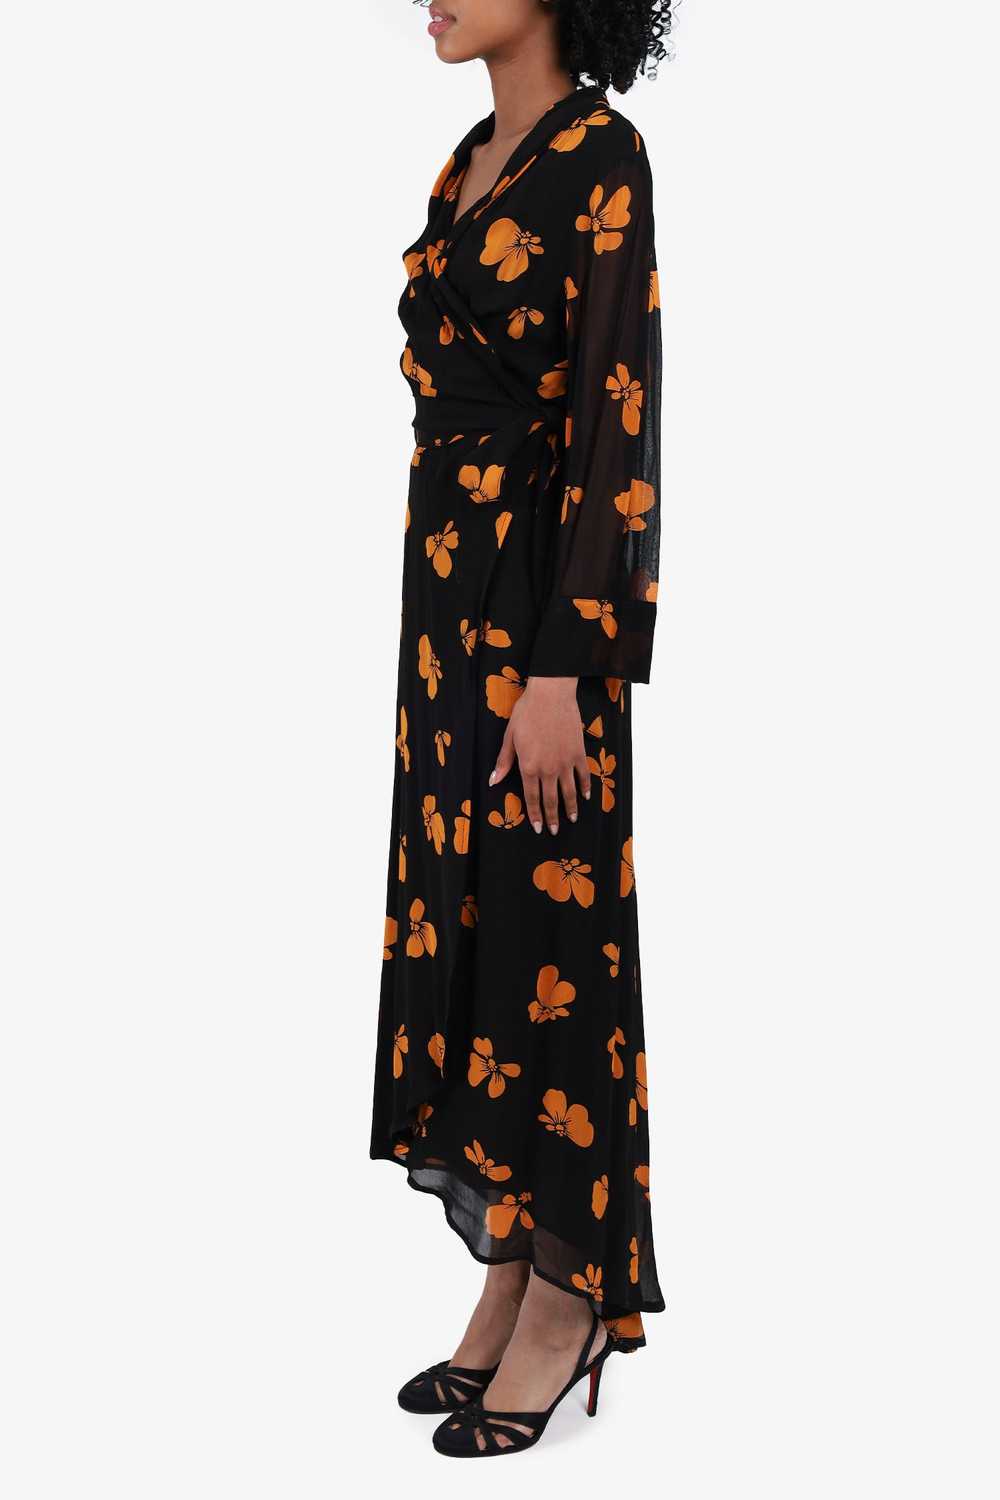 Ganni Black/Orange Floral Print Wrap Dress Size 36 - image 2